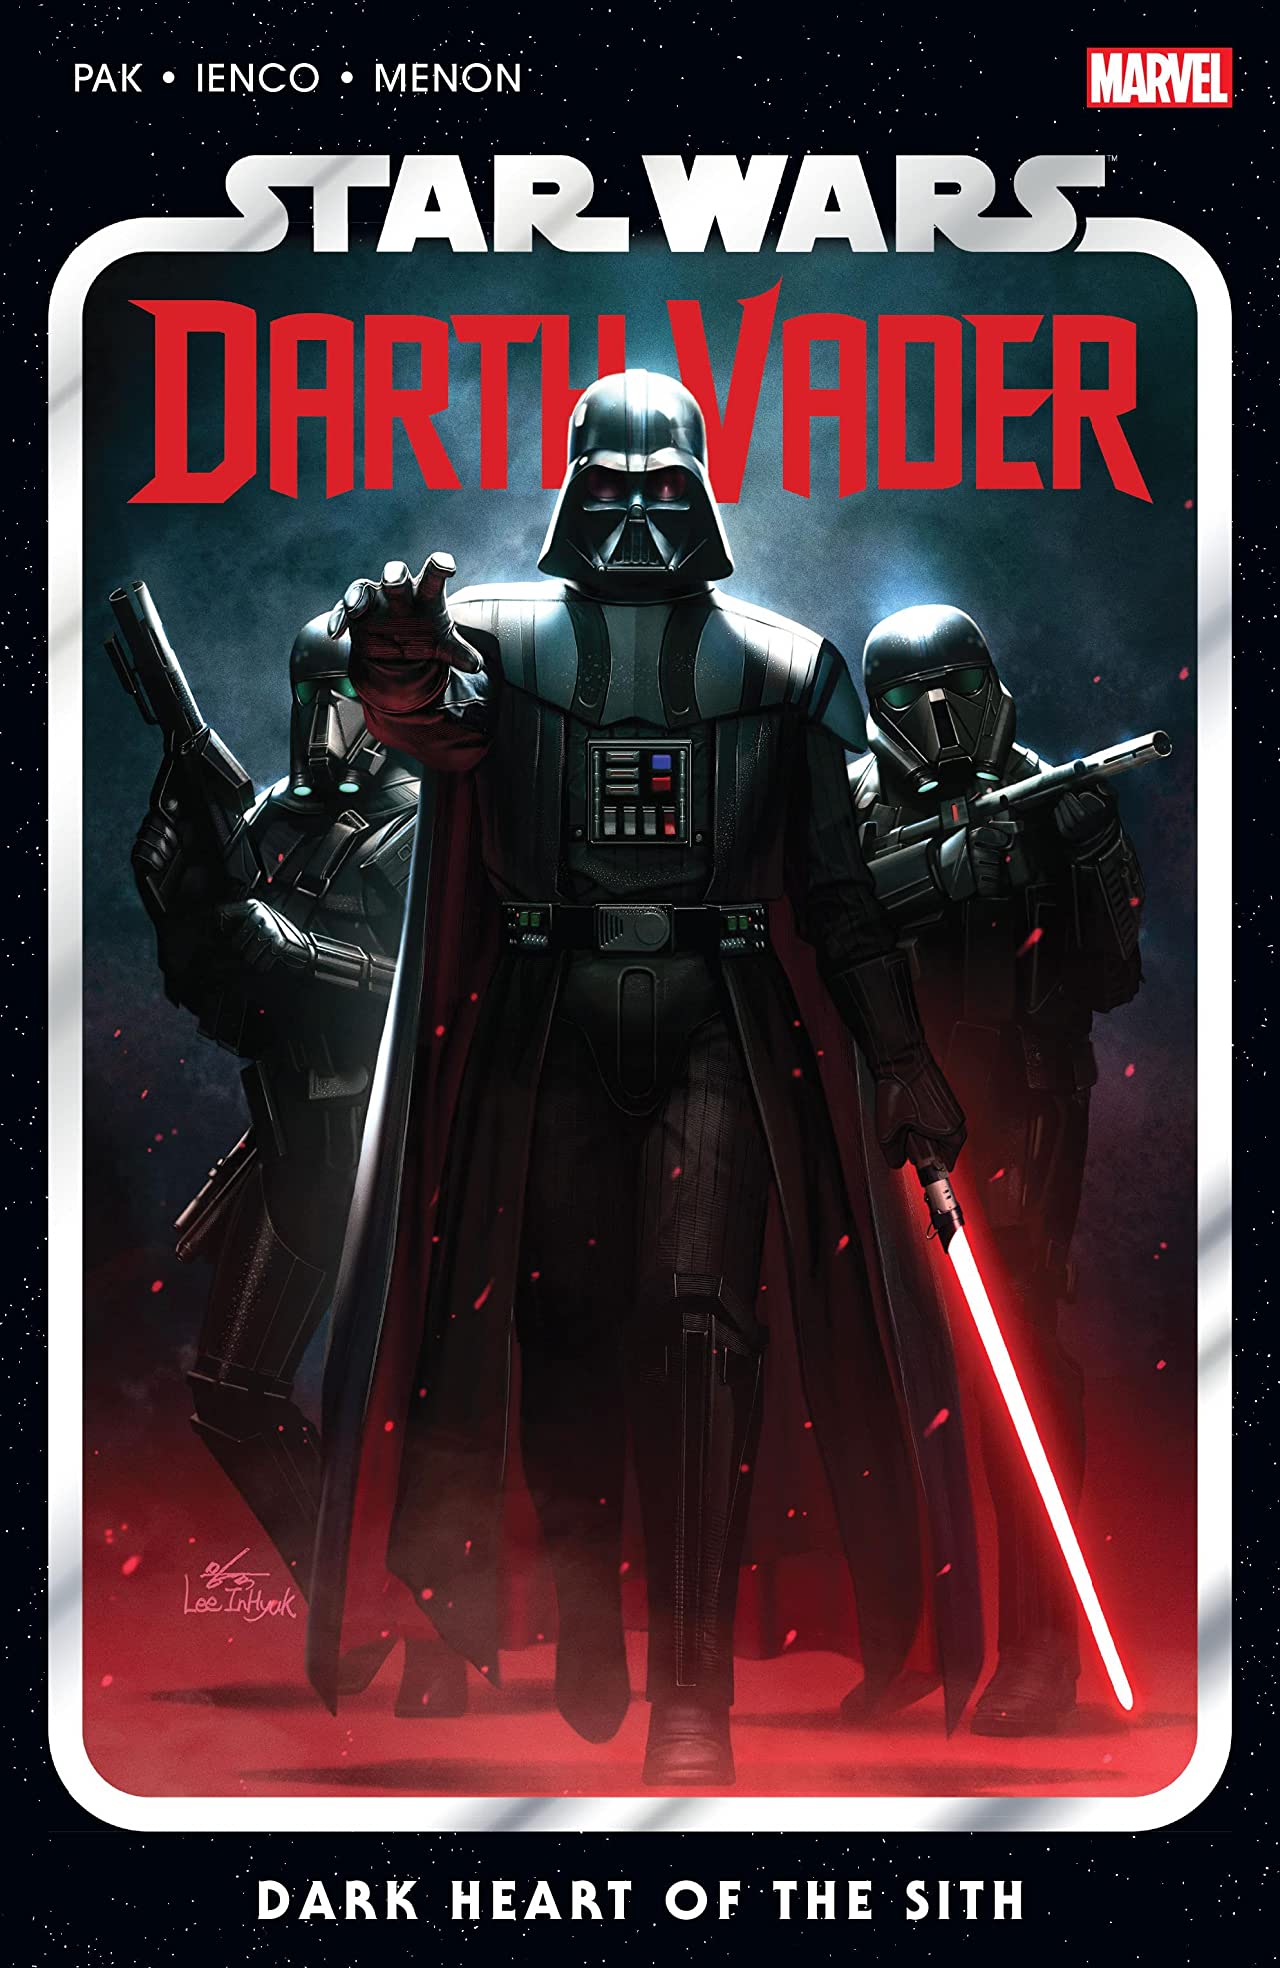 Star Wars: Darth Vader, Vol. 1: Dark Heart of the Sith by Greg Pak